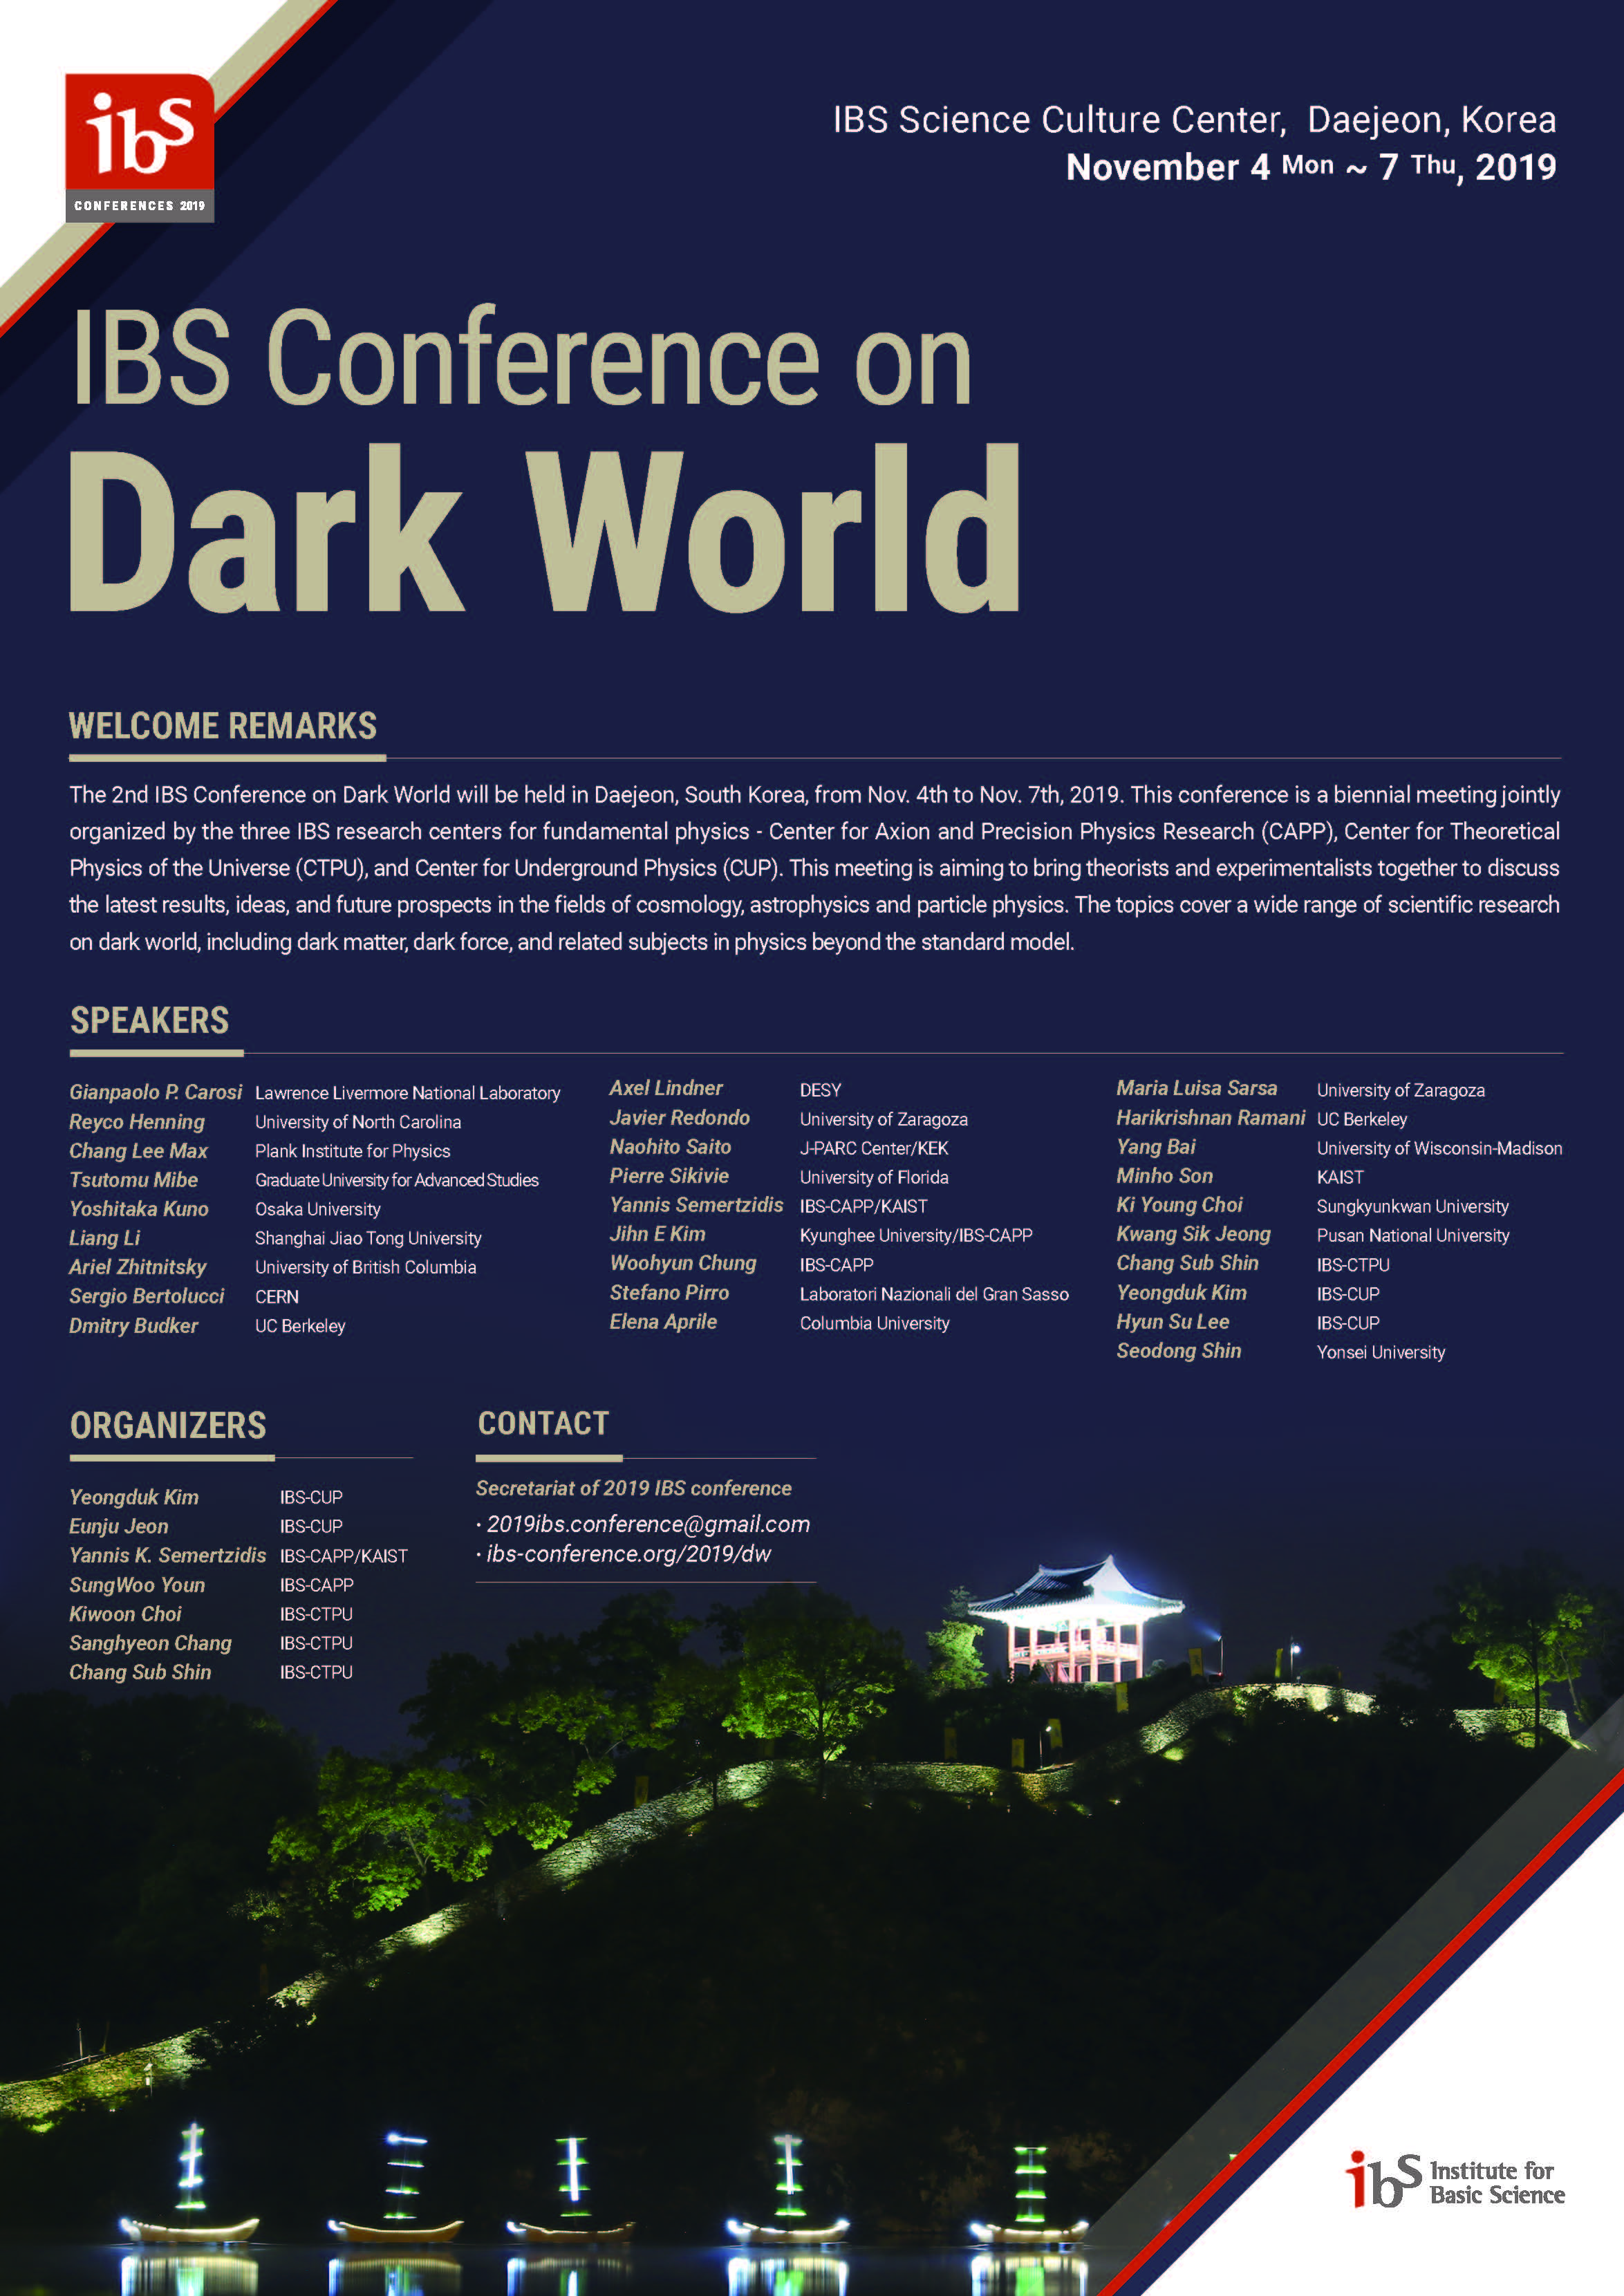 IBS Conference on Dark World 2019